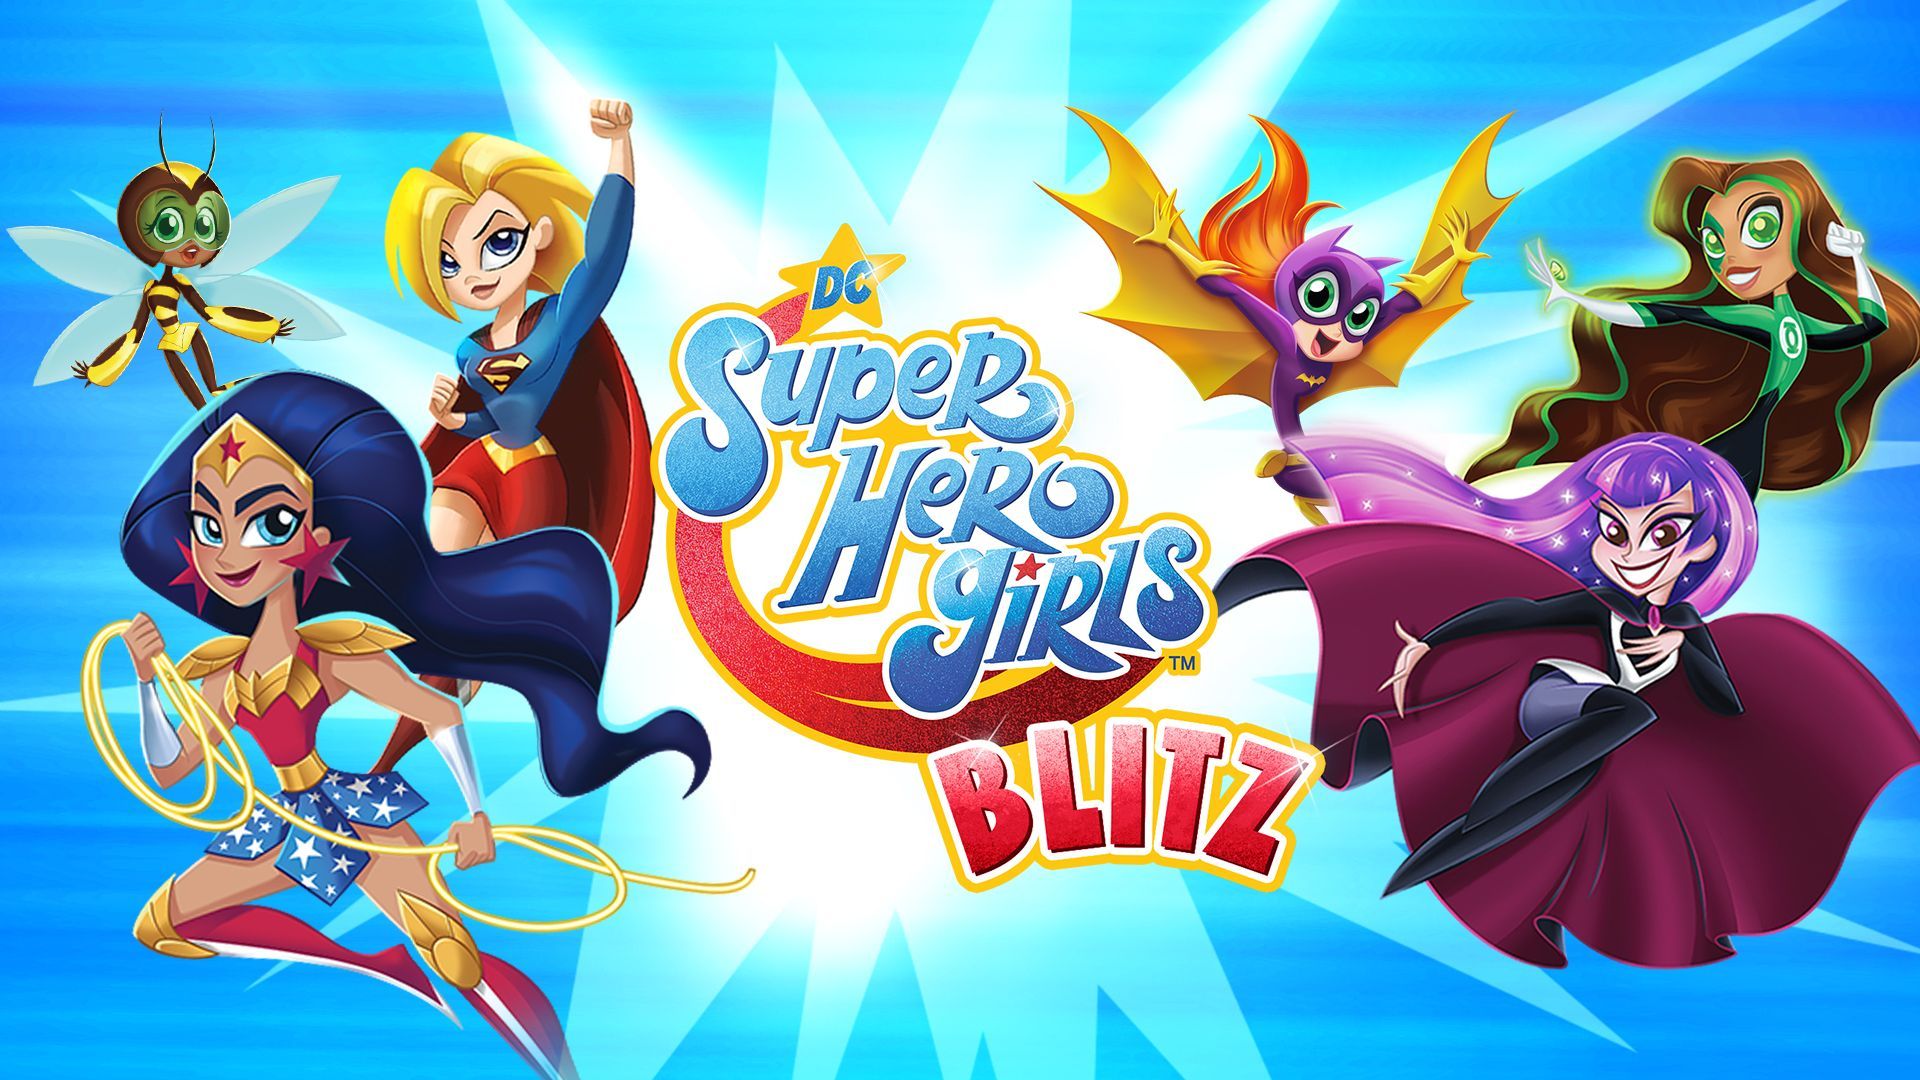 dc super hero girls 2019. Dc super .com